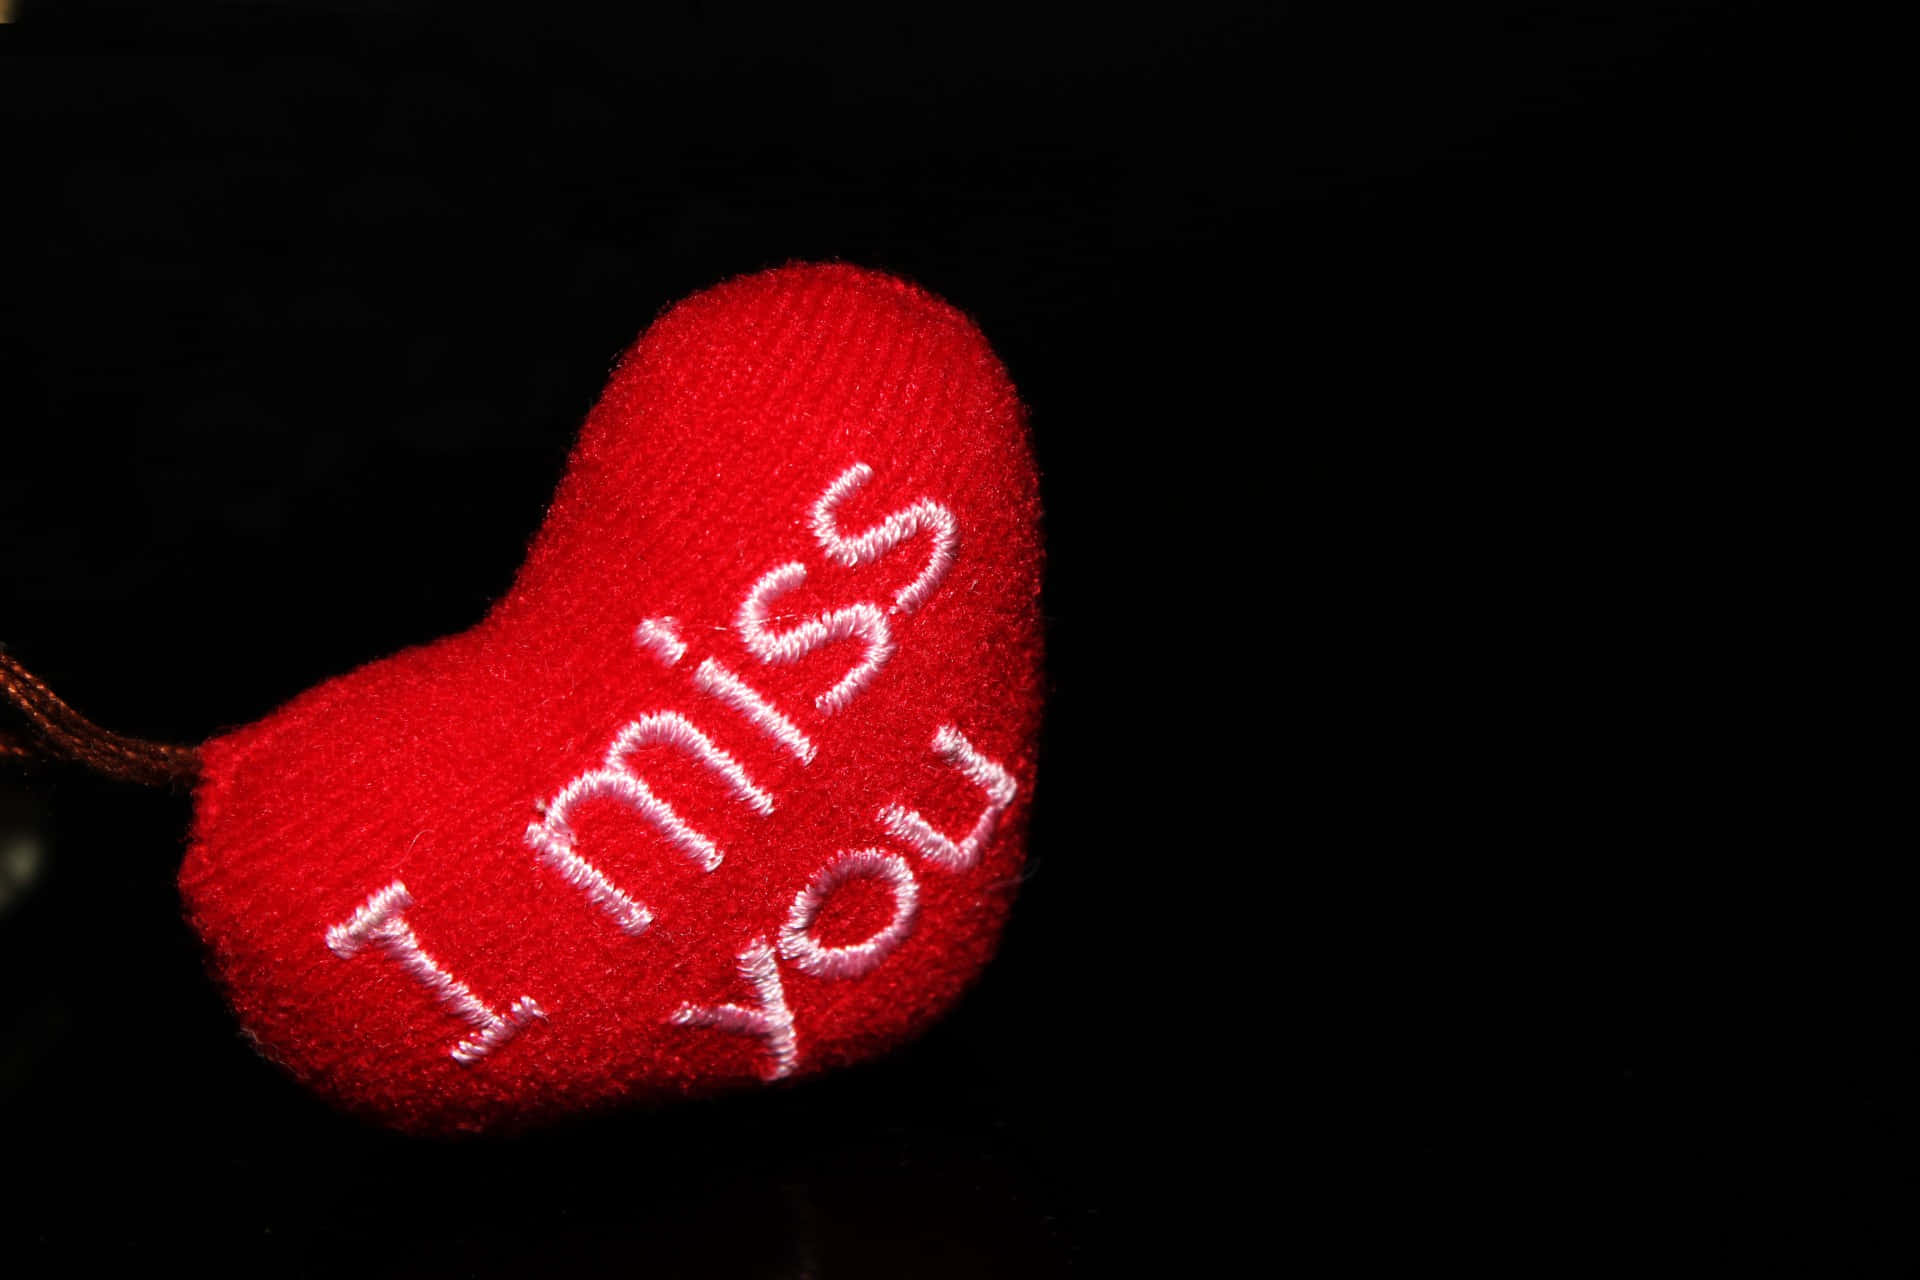 A heartfelt 'I Miss You' message written in sand at a beach